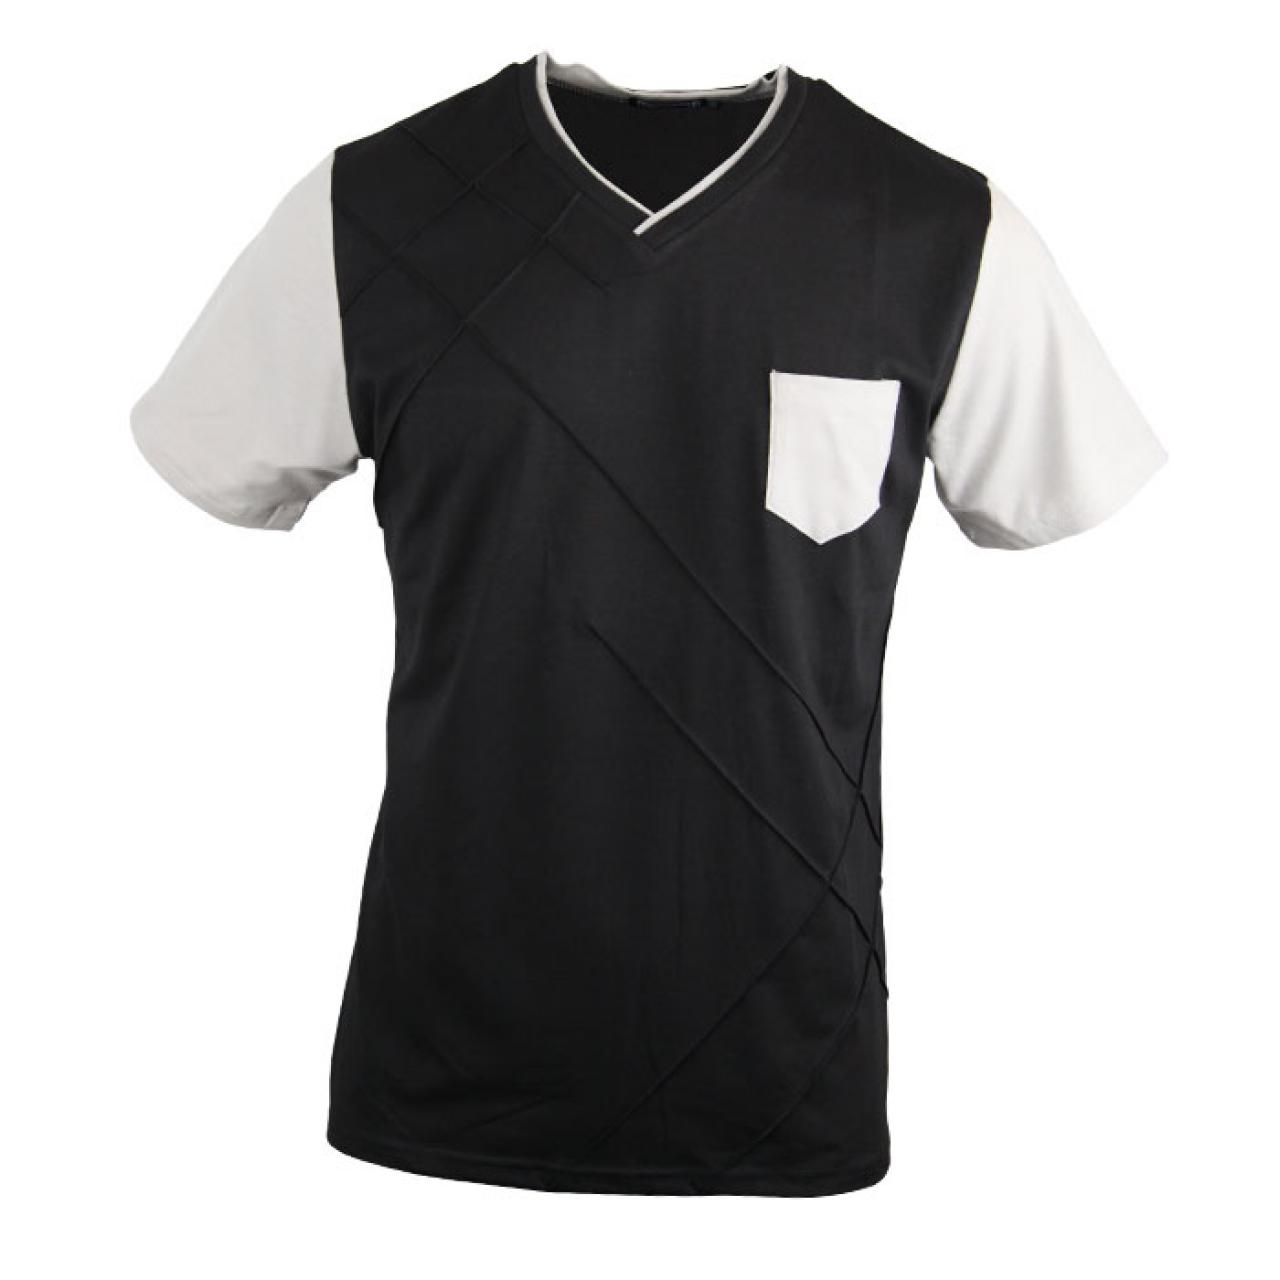 Men's Half Sleeve V Neck Black T Shirt With Pocket White